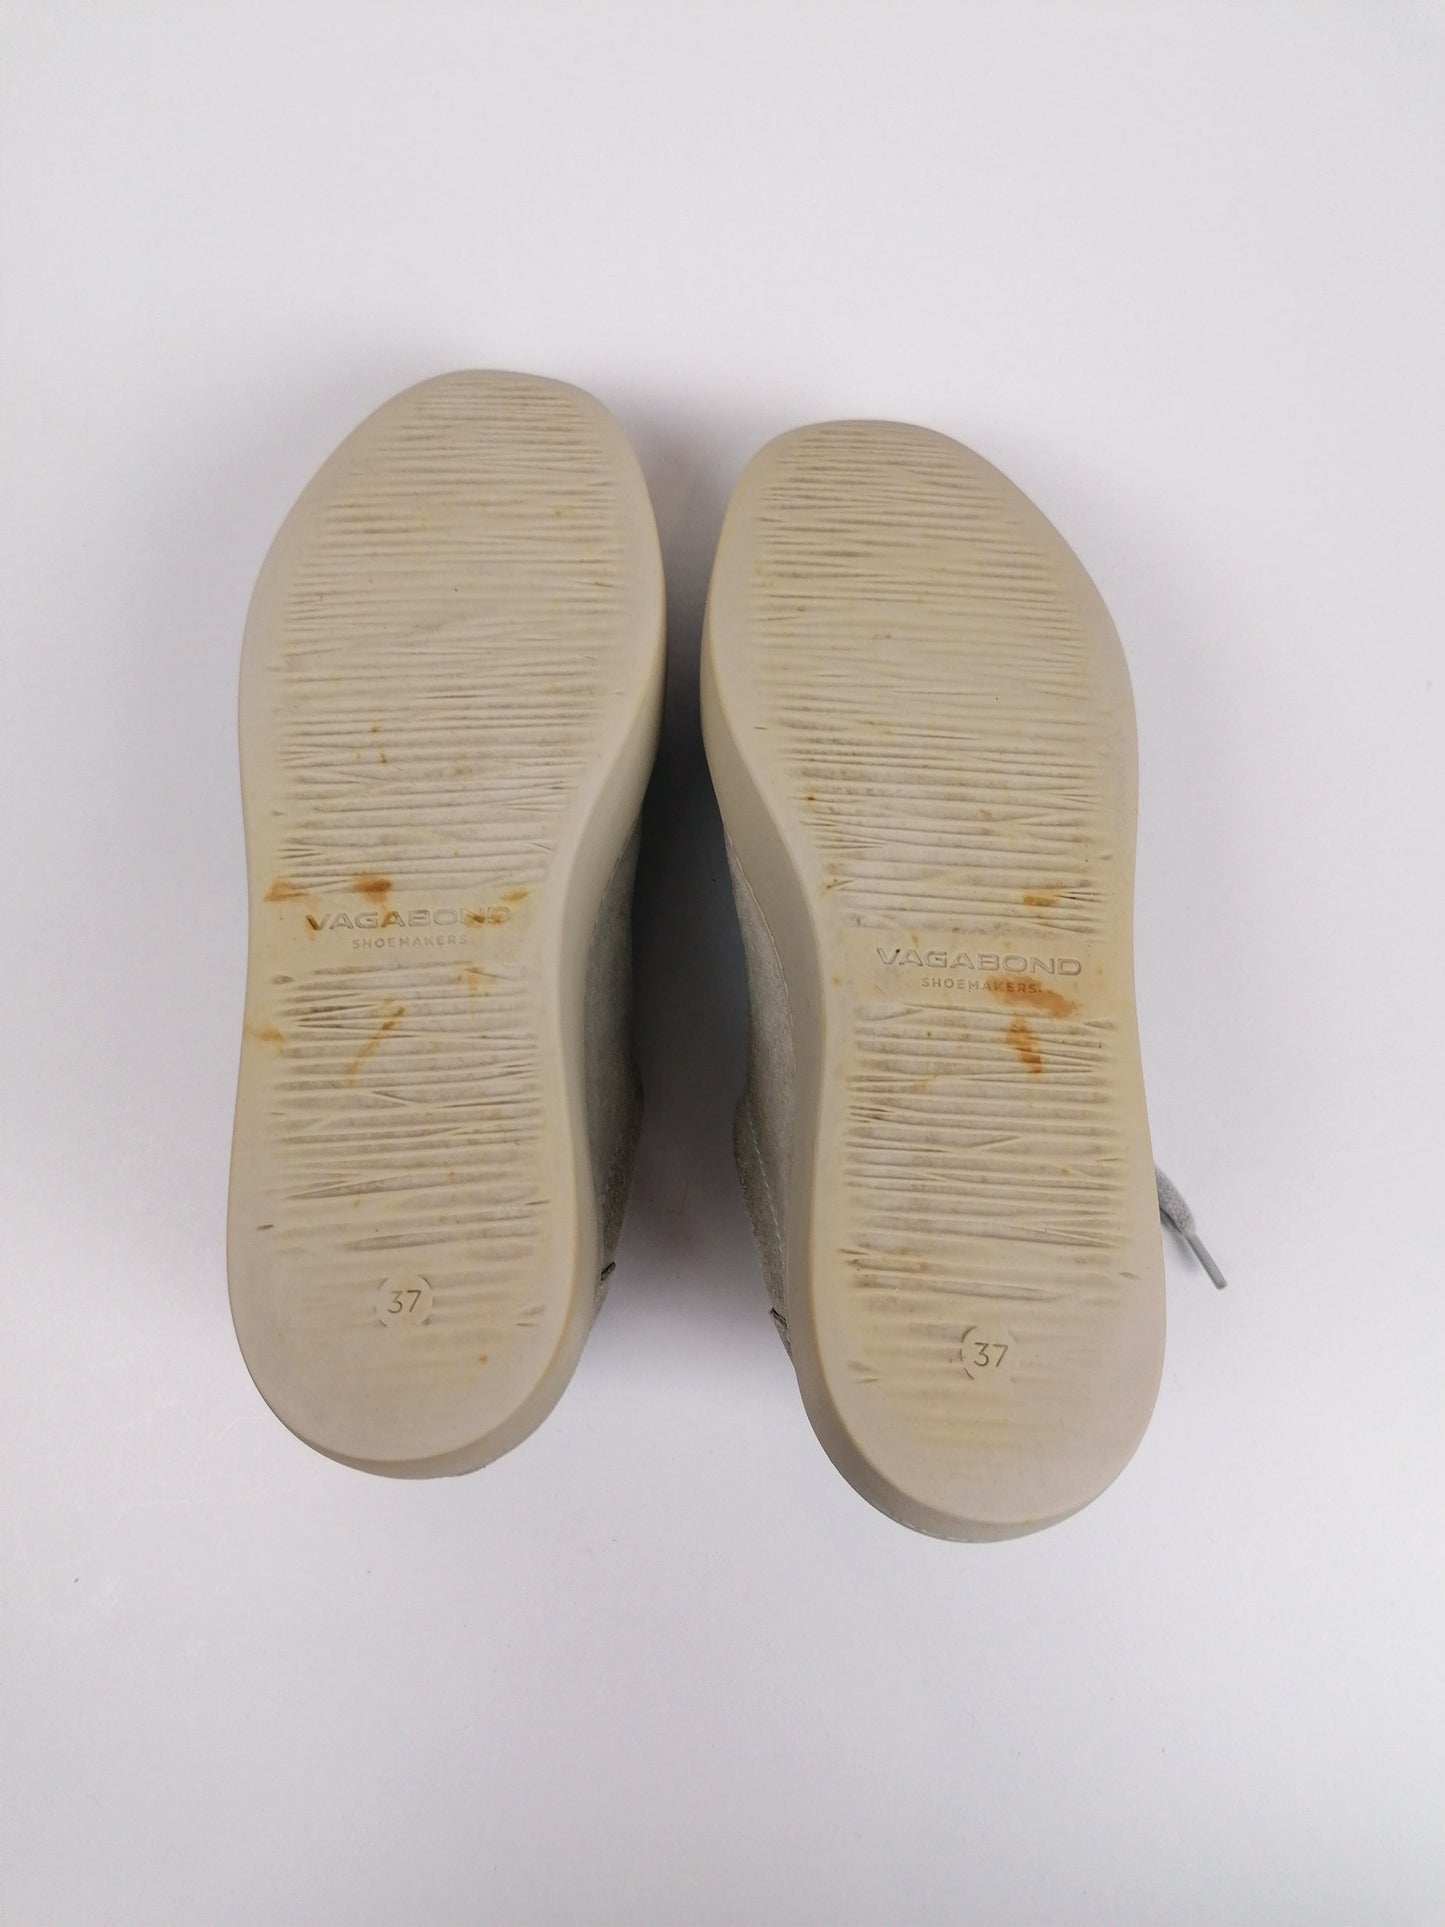 Y2K VAGABOND Platform Sneakers Suede - size EU 37 / us 6.5 / UK 4.5